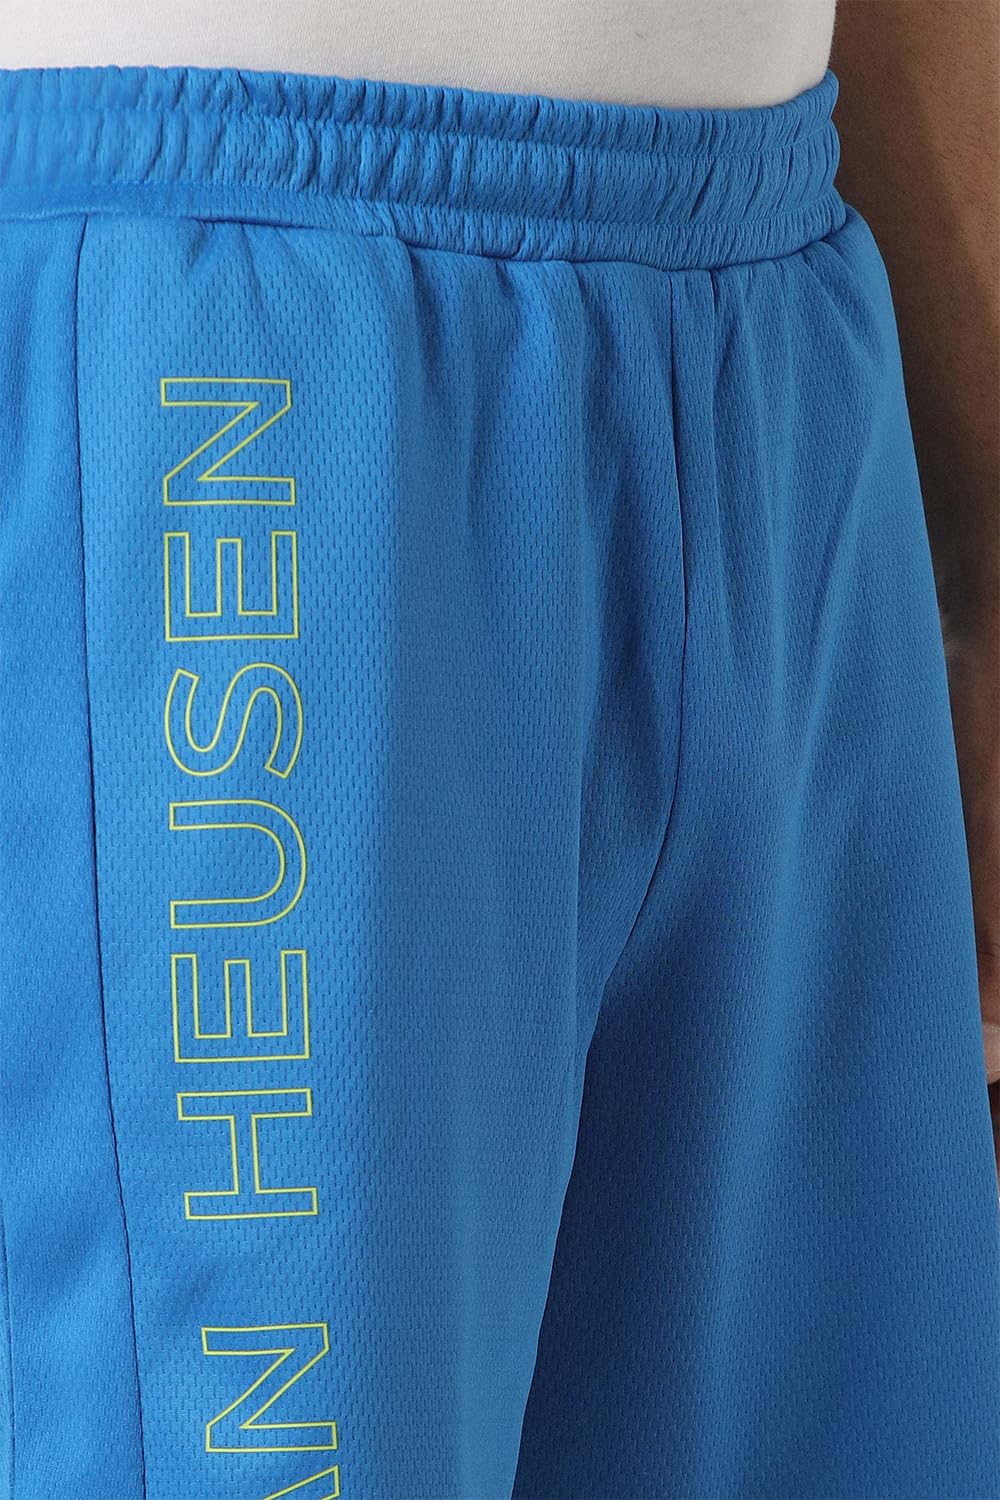 Van Heusen Men's Bermuda Shorts (VFLOAATFE37169_Blue_M